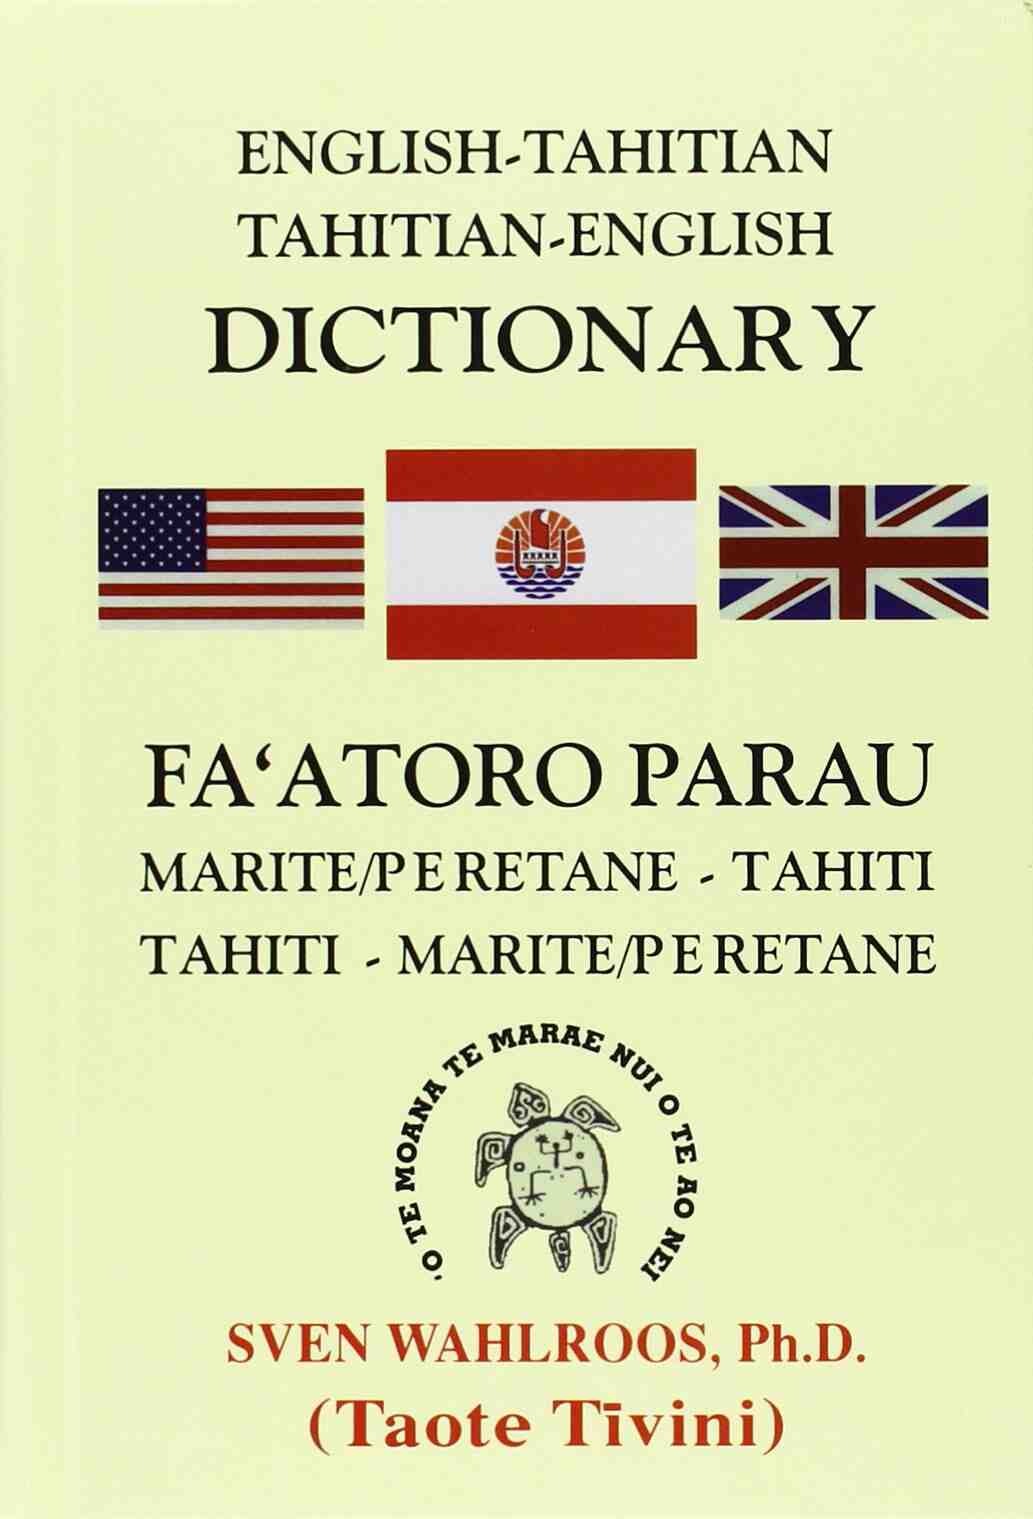 Image Gallery 4: What language is spoken in Tahiti?